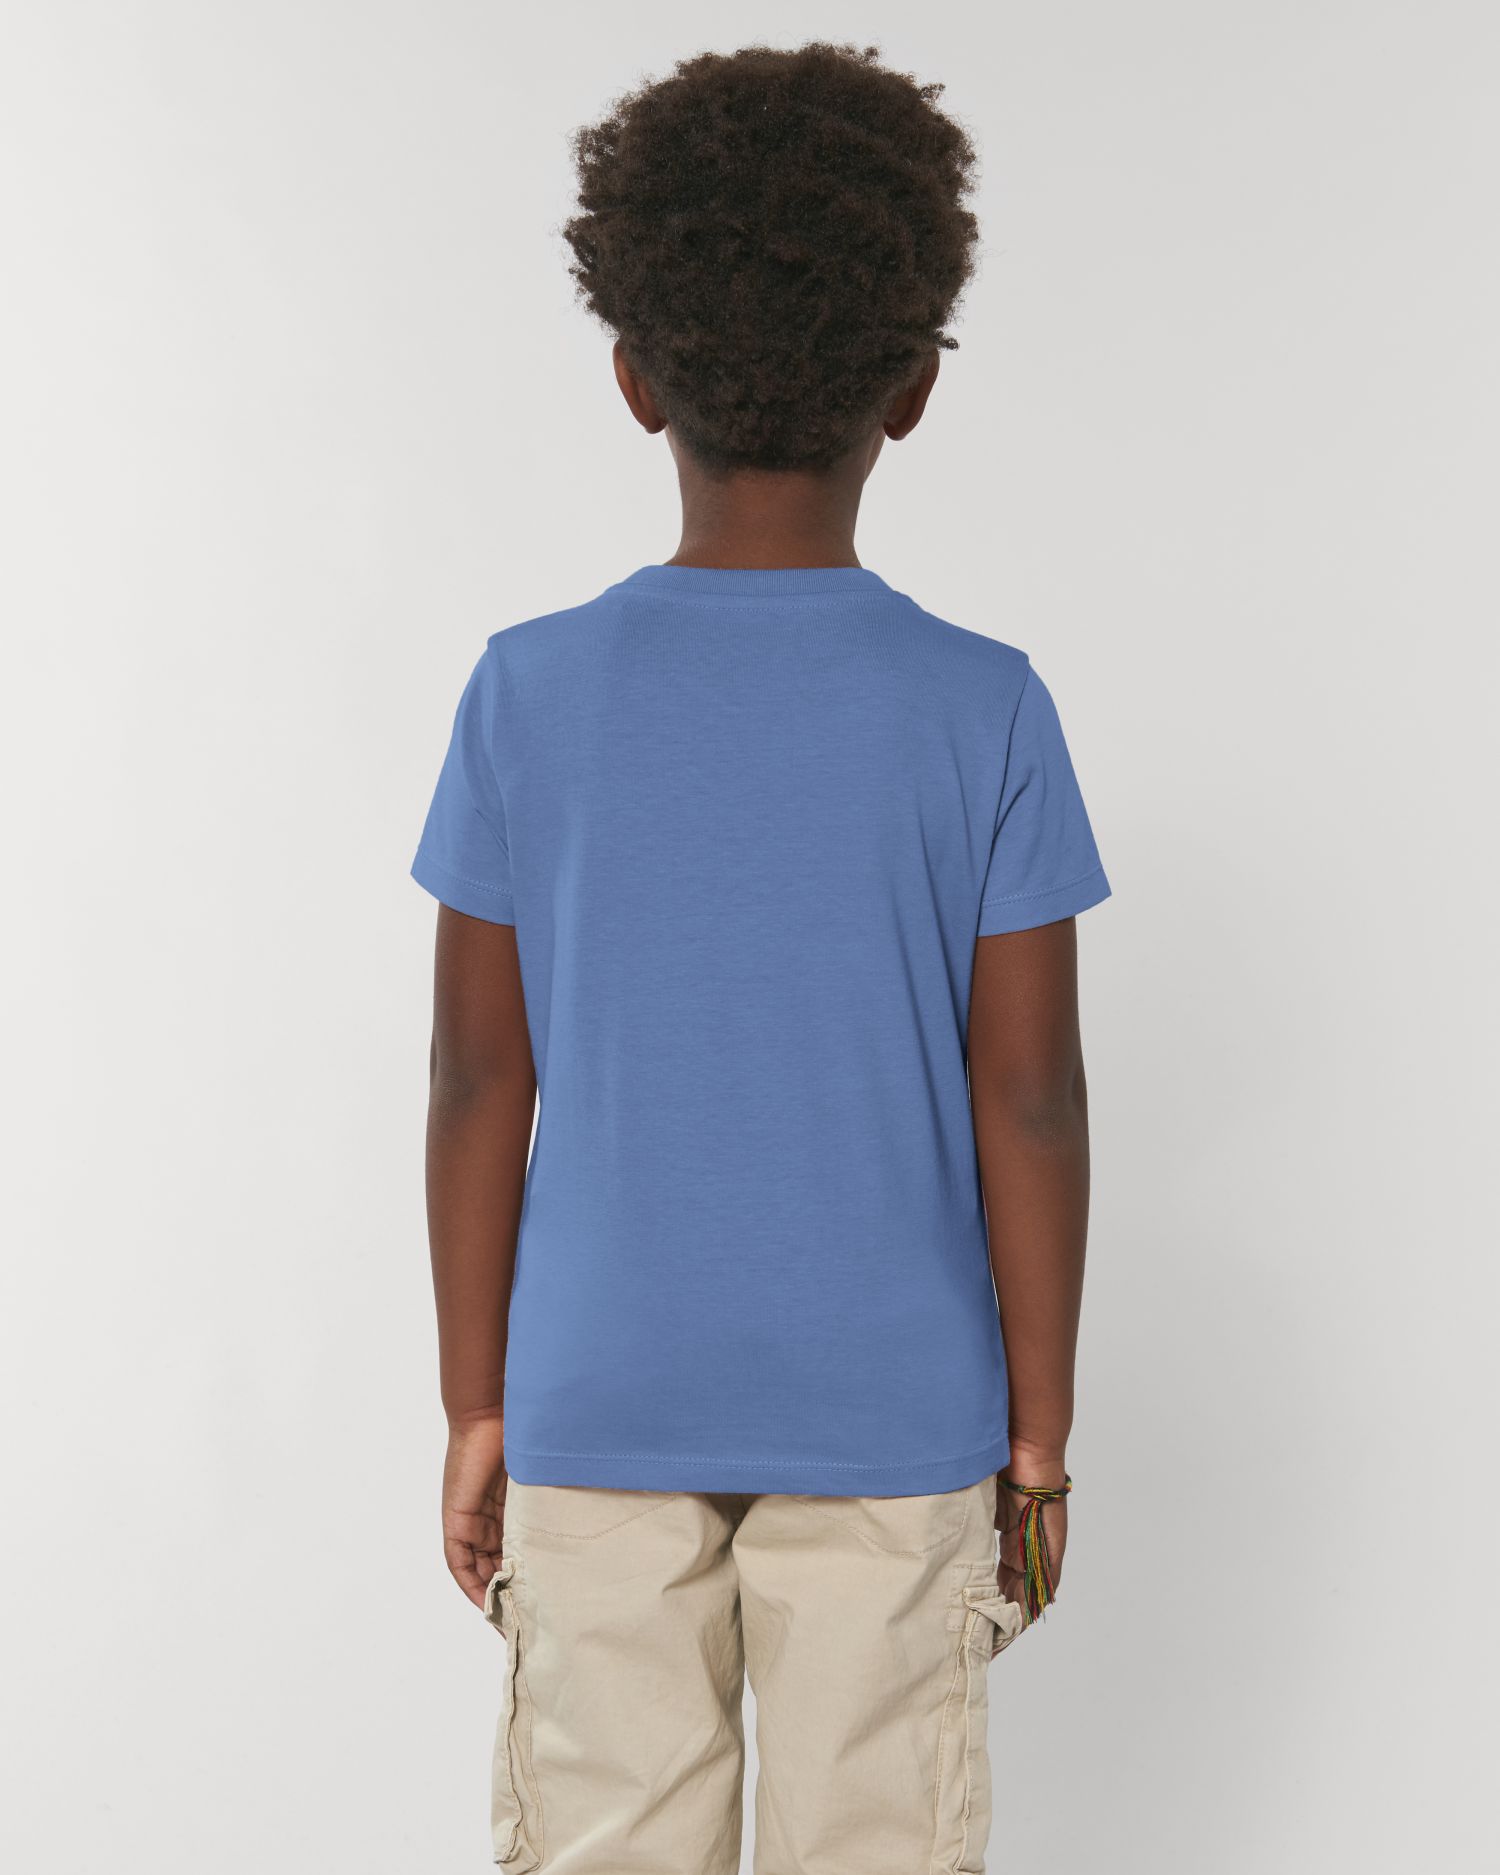 Kids T-Shirt Mini Creator in Farbe Bright Blue